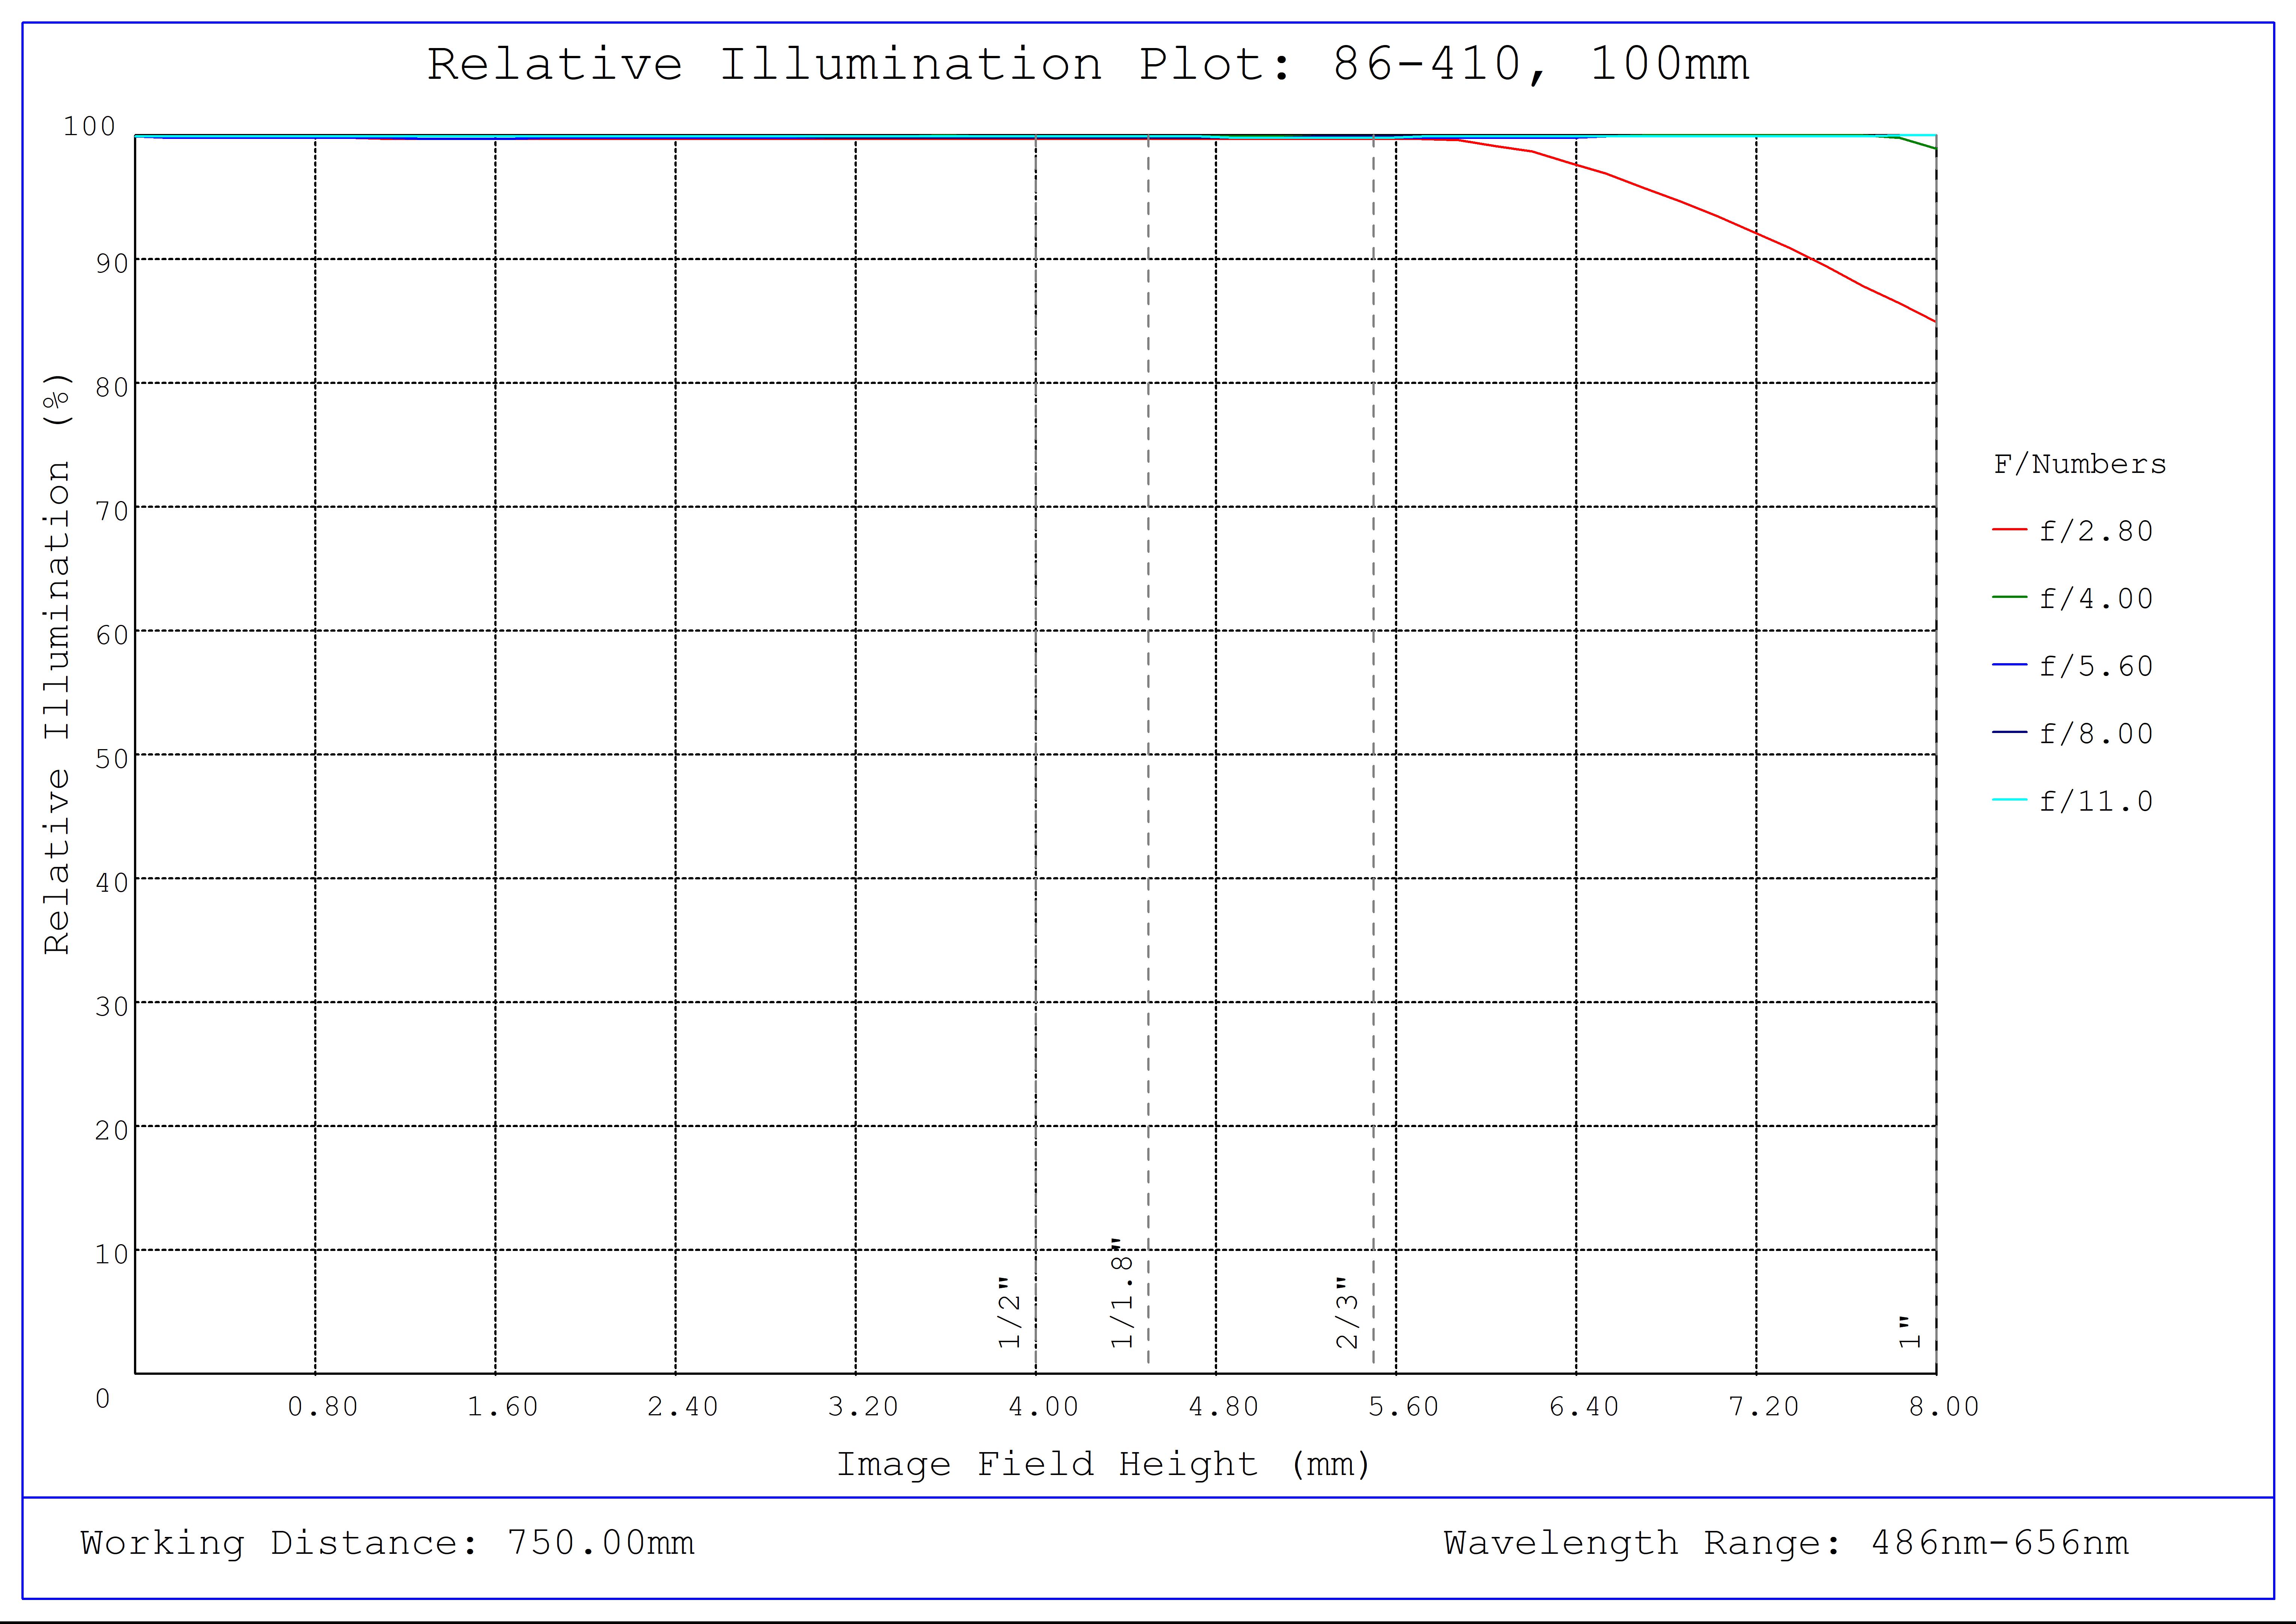 #86-410, 100mm C Series Fixed Focal Length Lens, Relative Illumination Plot